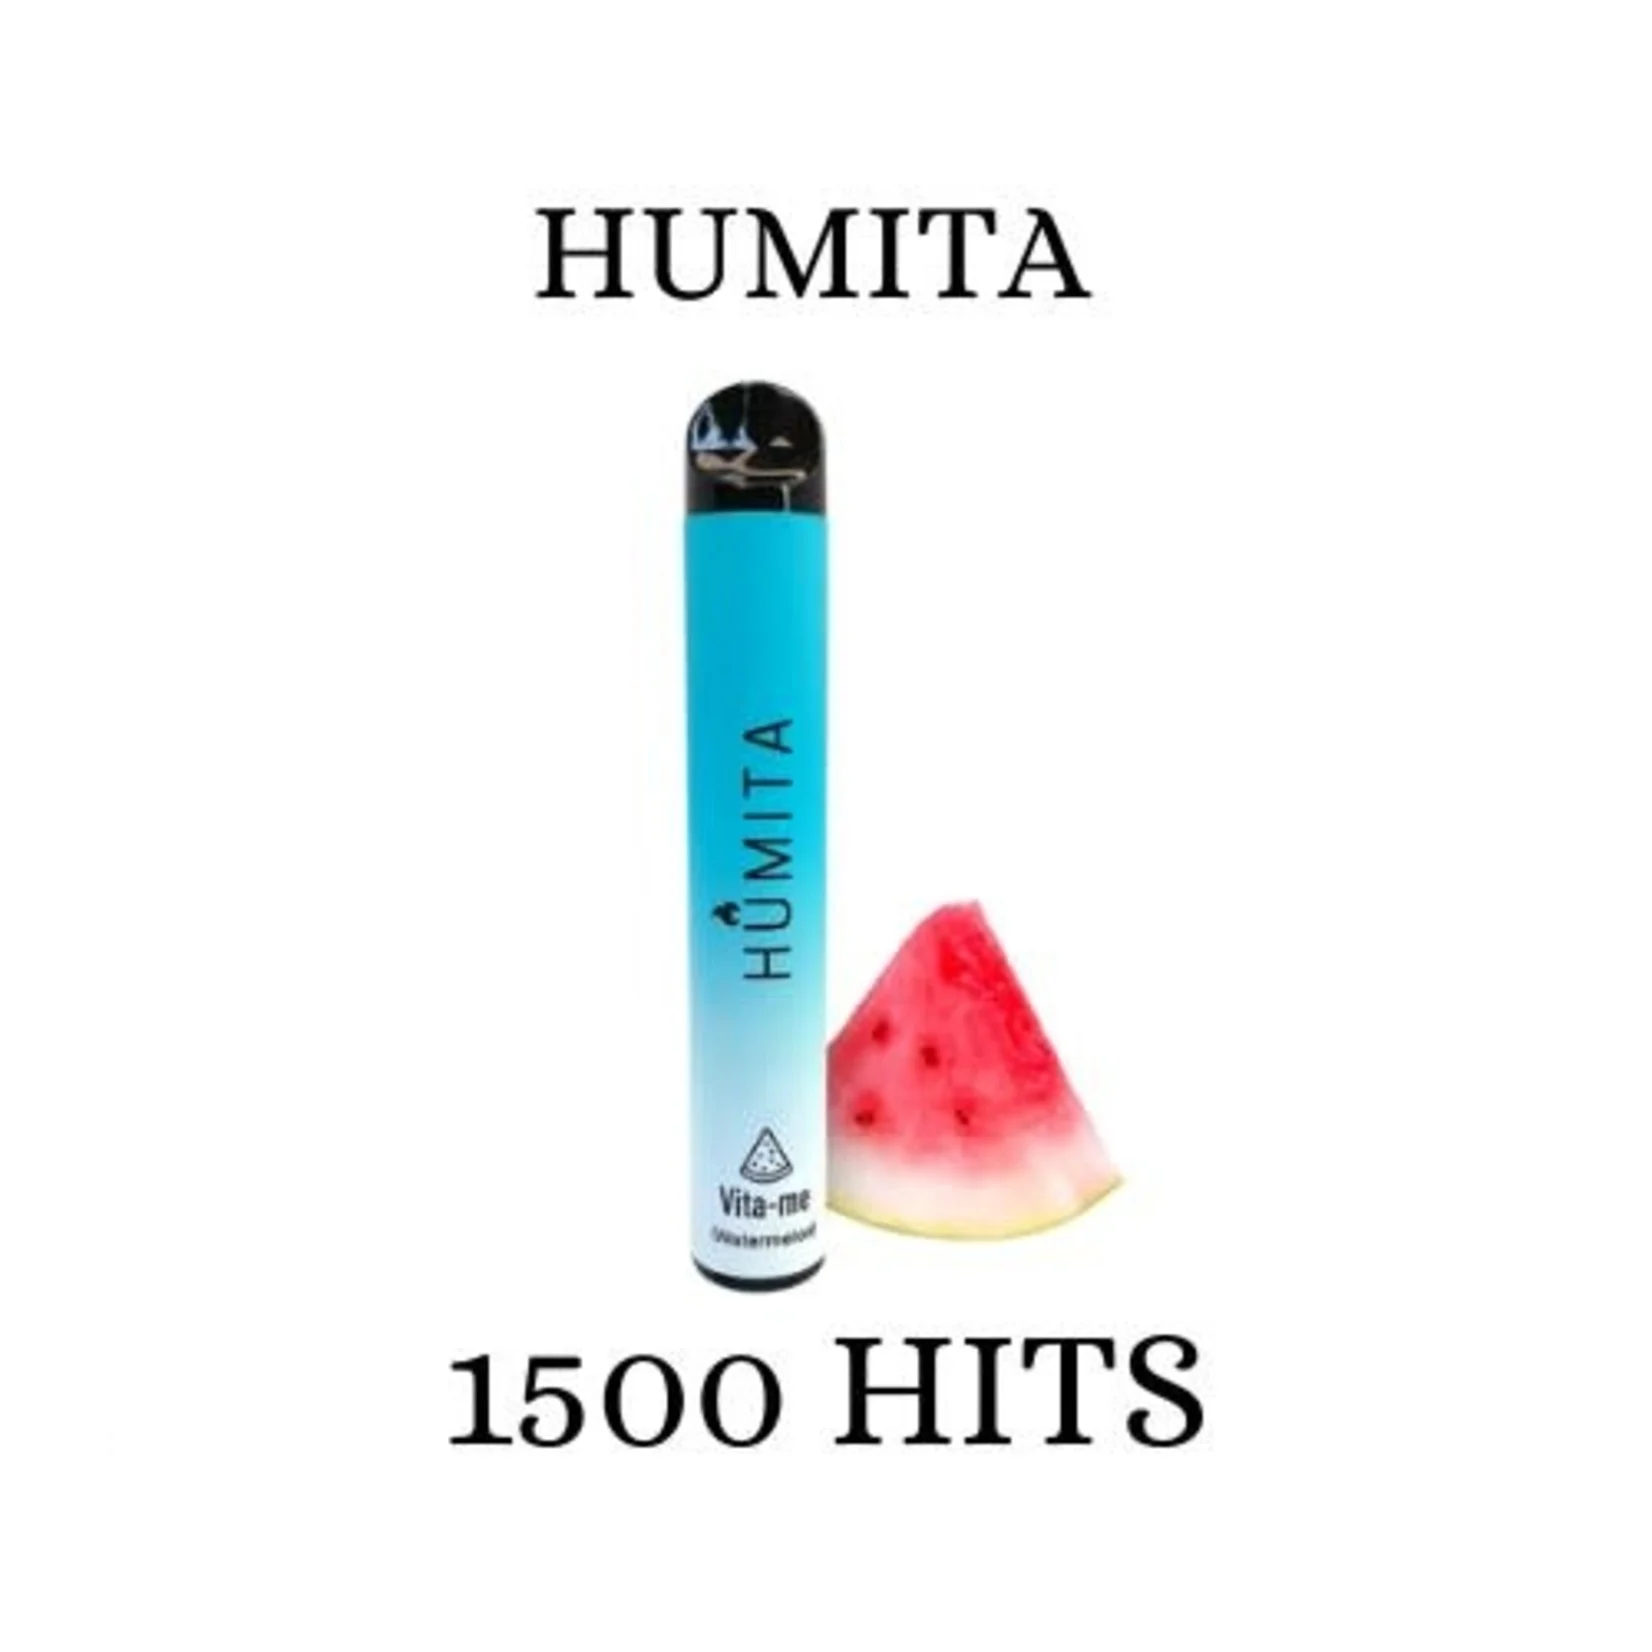 HUMMITA 1500